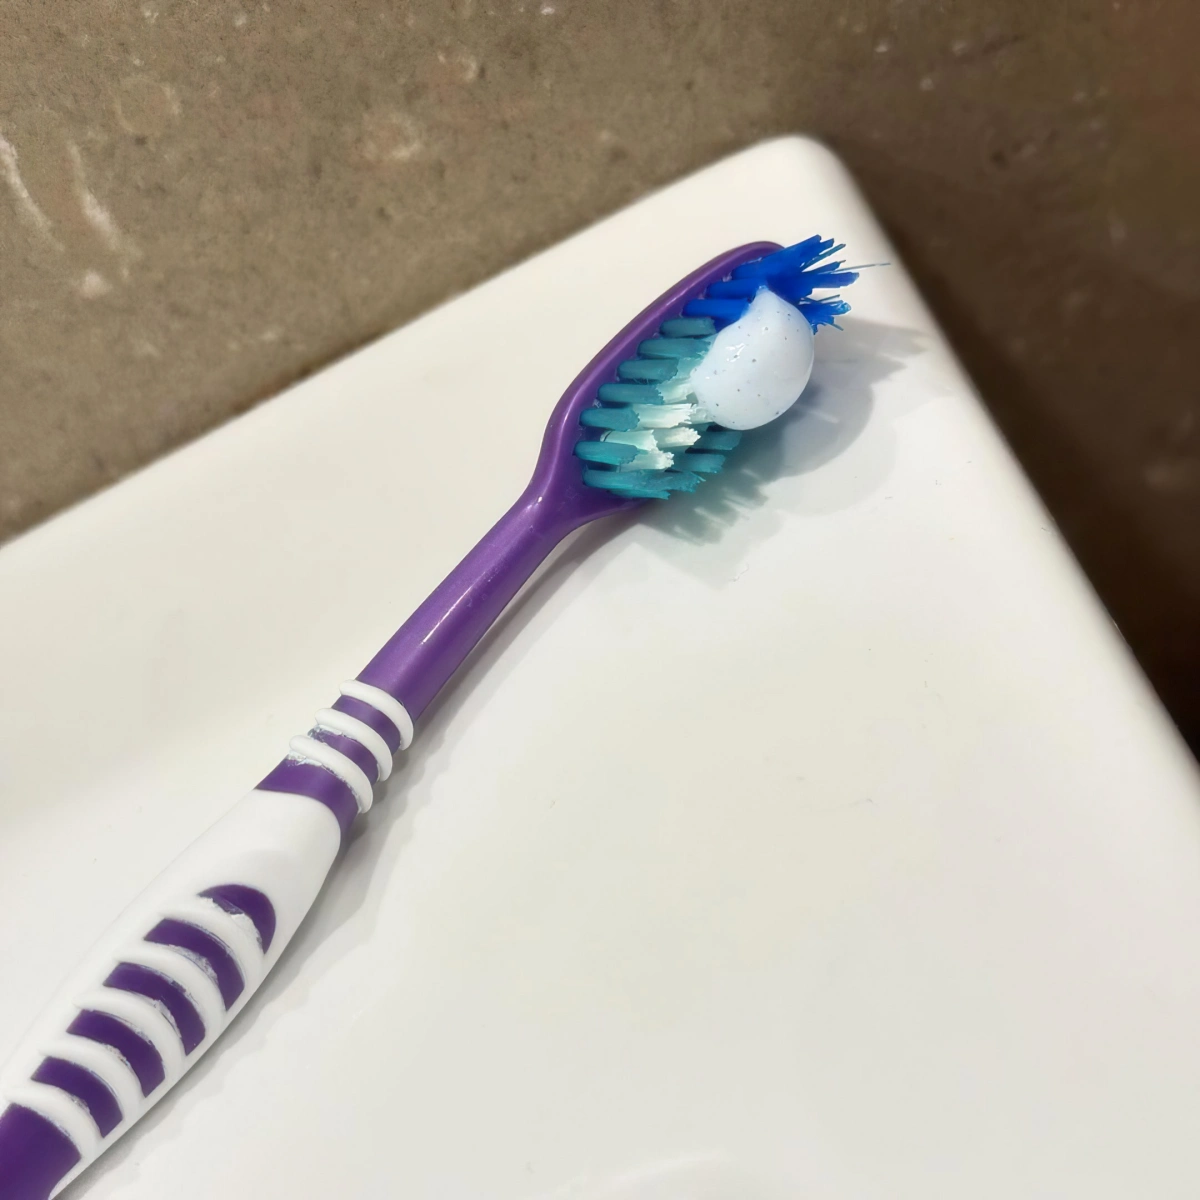 blanchir plastique jauni dentifrice brosse dents produit